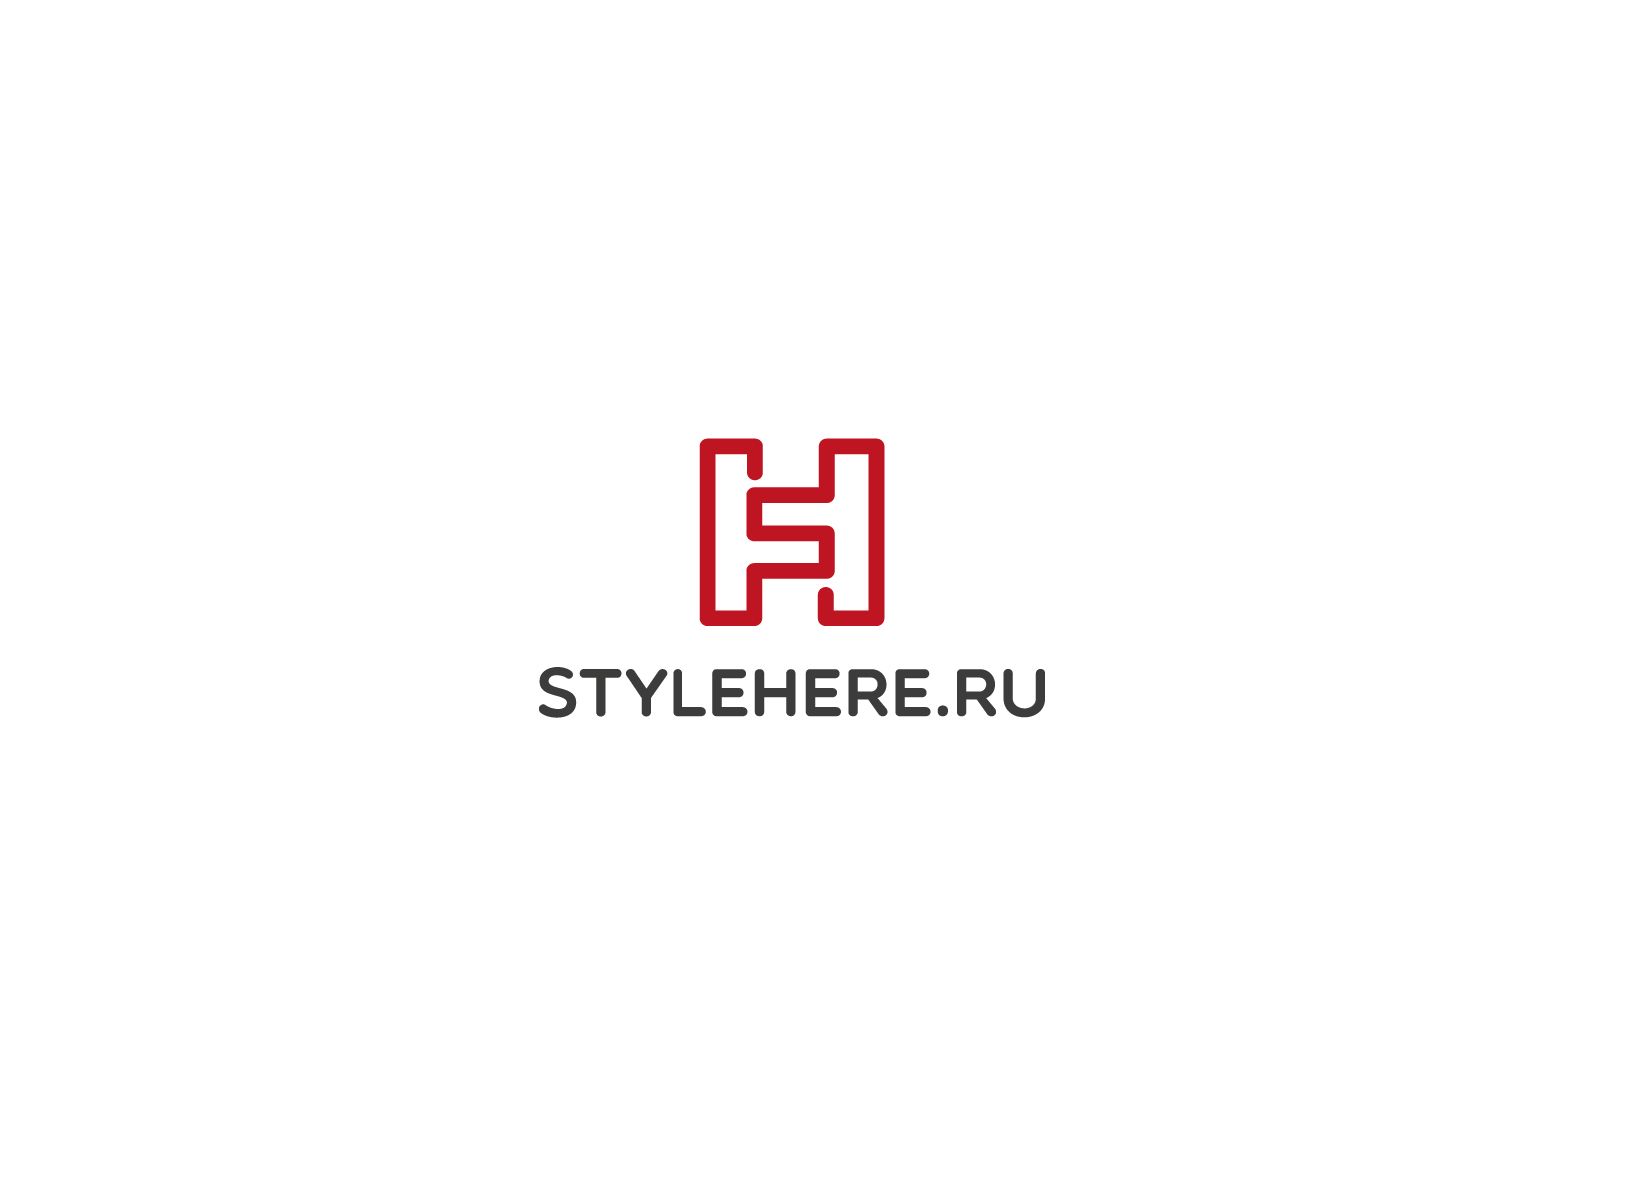 Логотип для интернет-магазина stylehere.ru - дизайнер U4po4mak